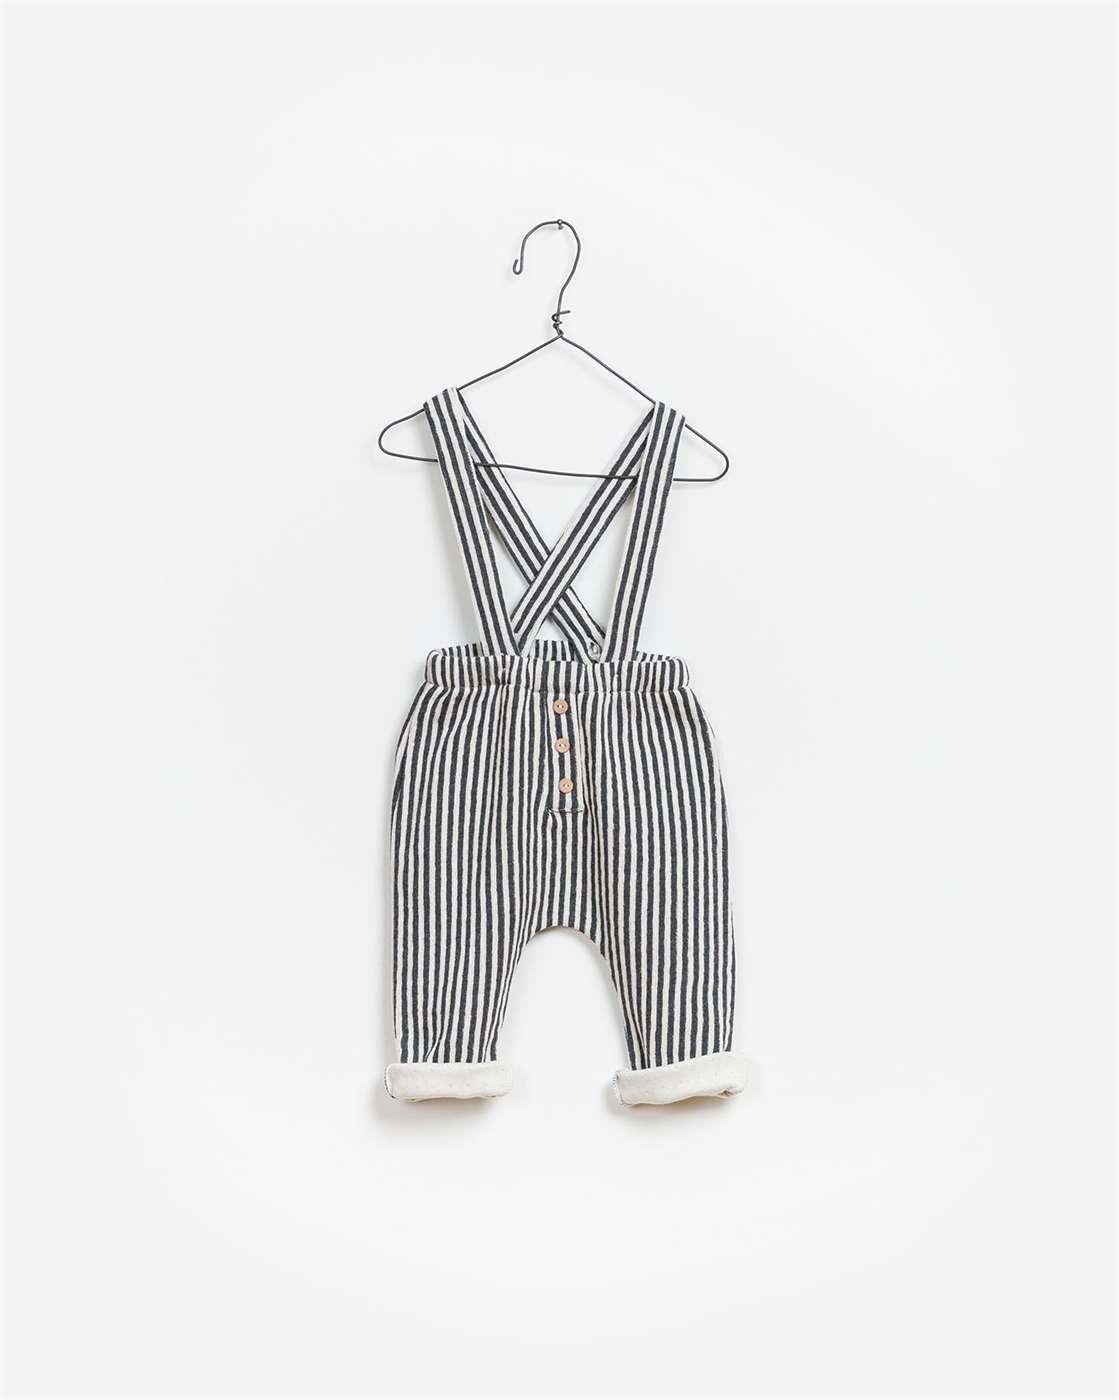 BeeBoo|BeeBoo PlayUp vêtements bébé baby clothes salopette overall rayures stripes coton bio organic cotton gris grey